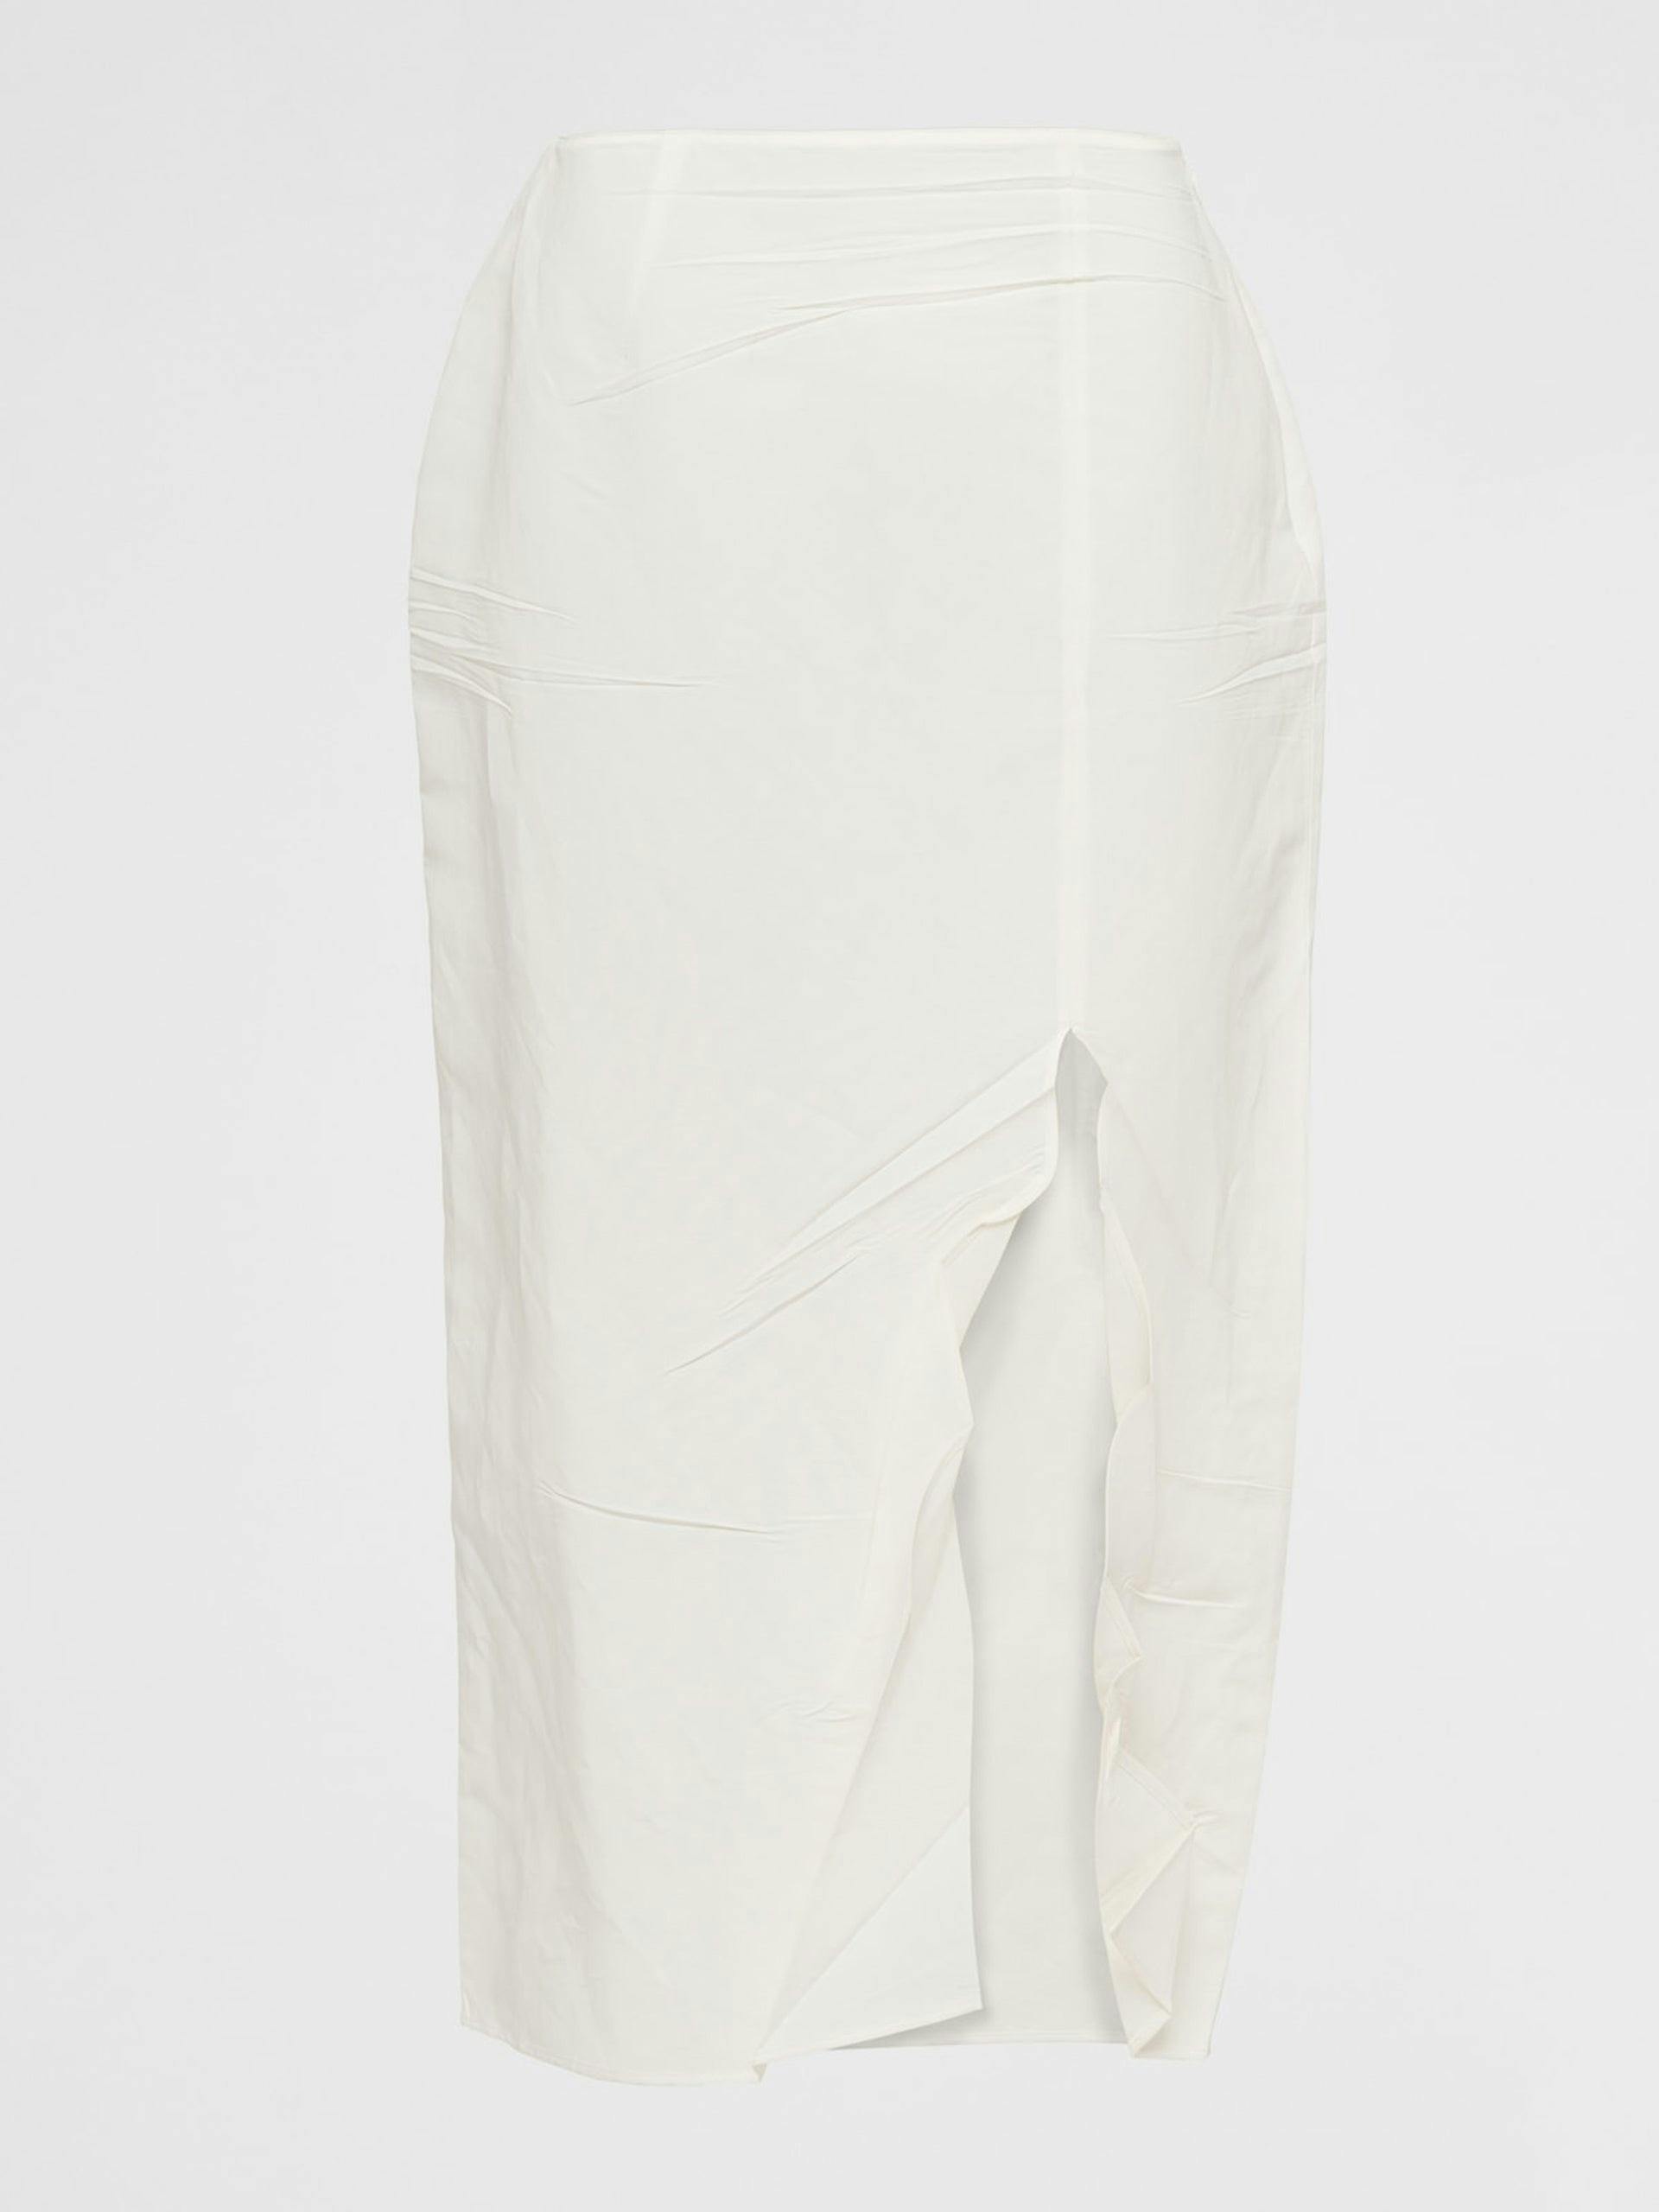 White midi skirt with a slit